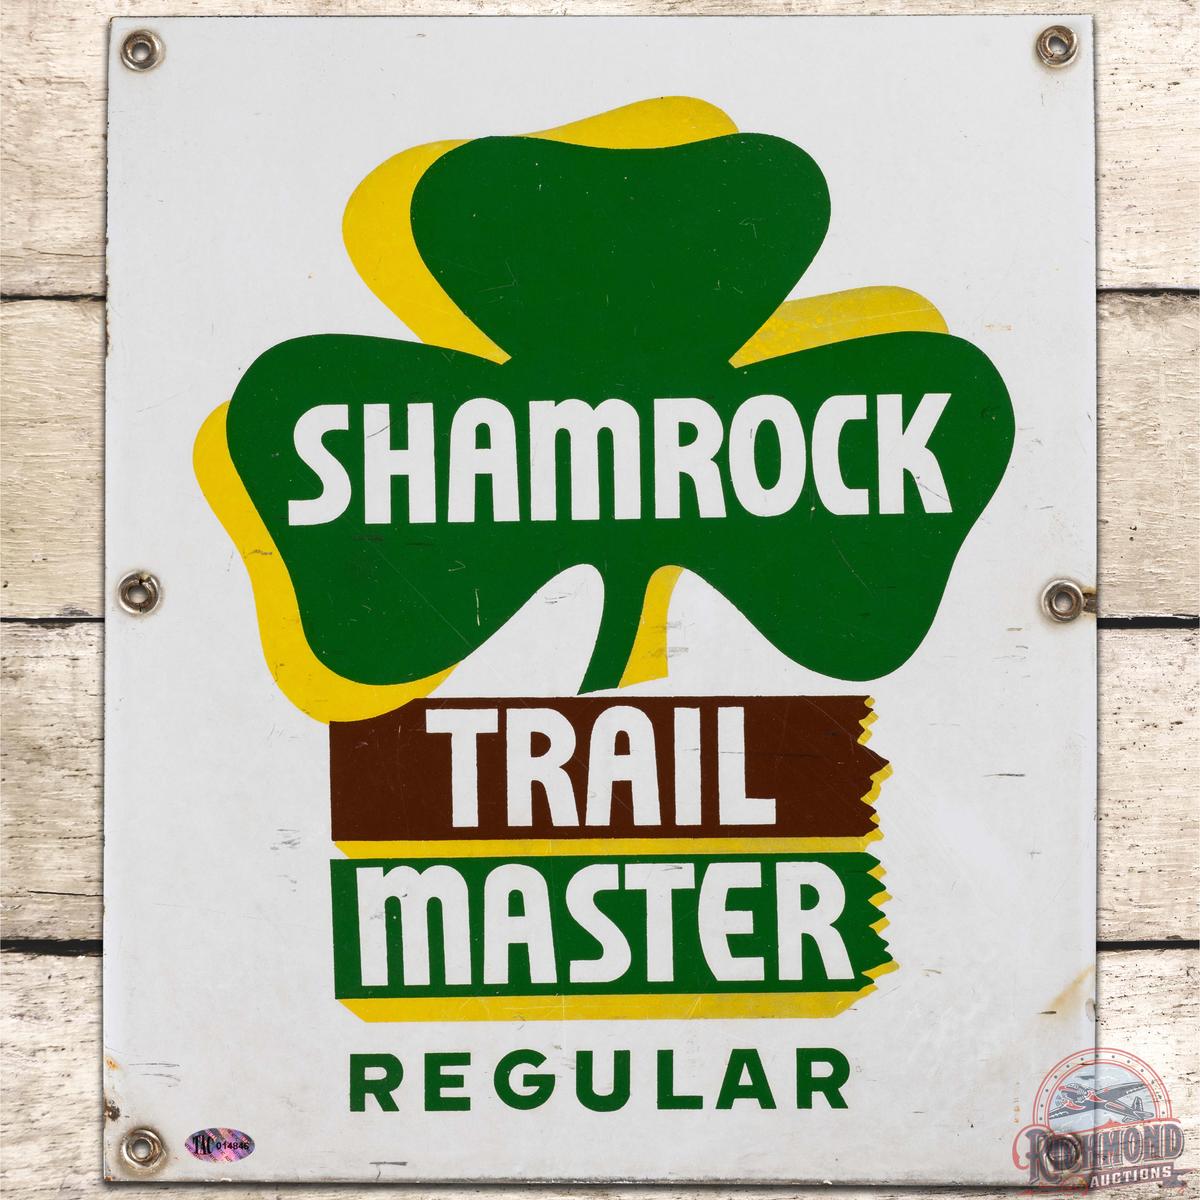 Shamrock Trail Master Regular SS Porcelain Gas Pump Plate Sign